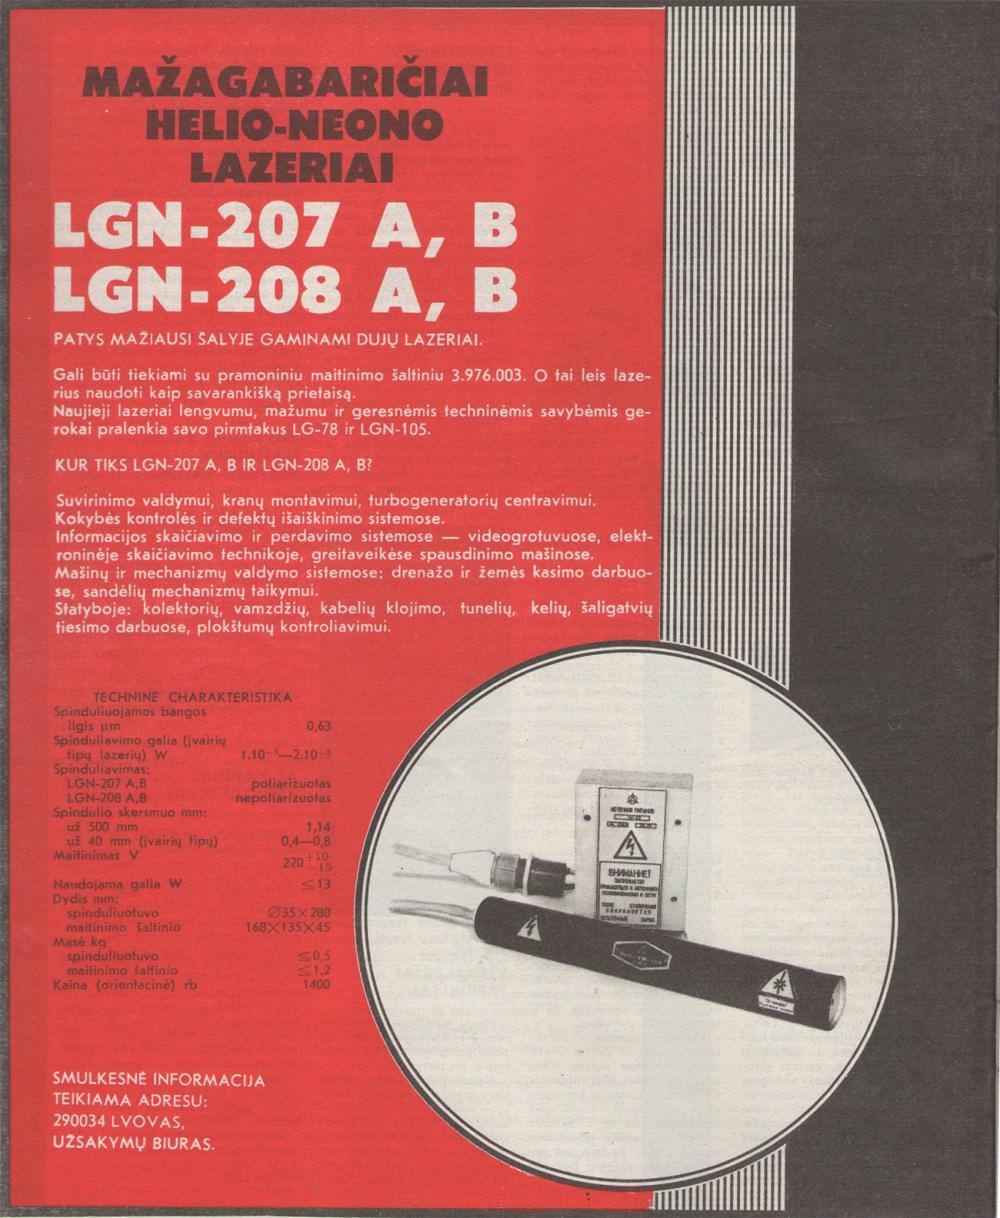 Mažagabaričiai helio-neono lazeriai LGN-207 A,B / LGN-208 A, B